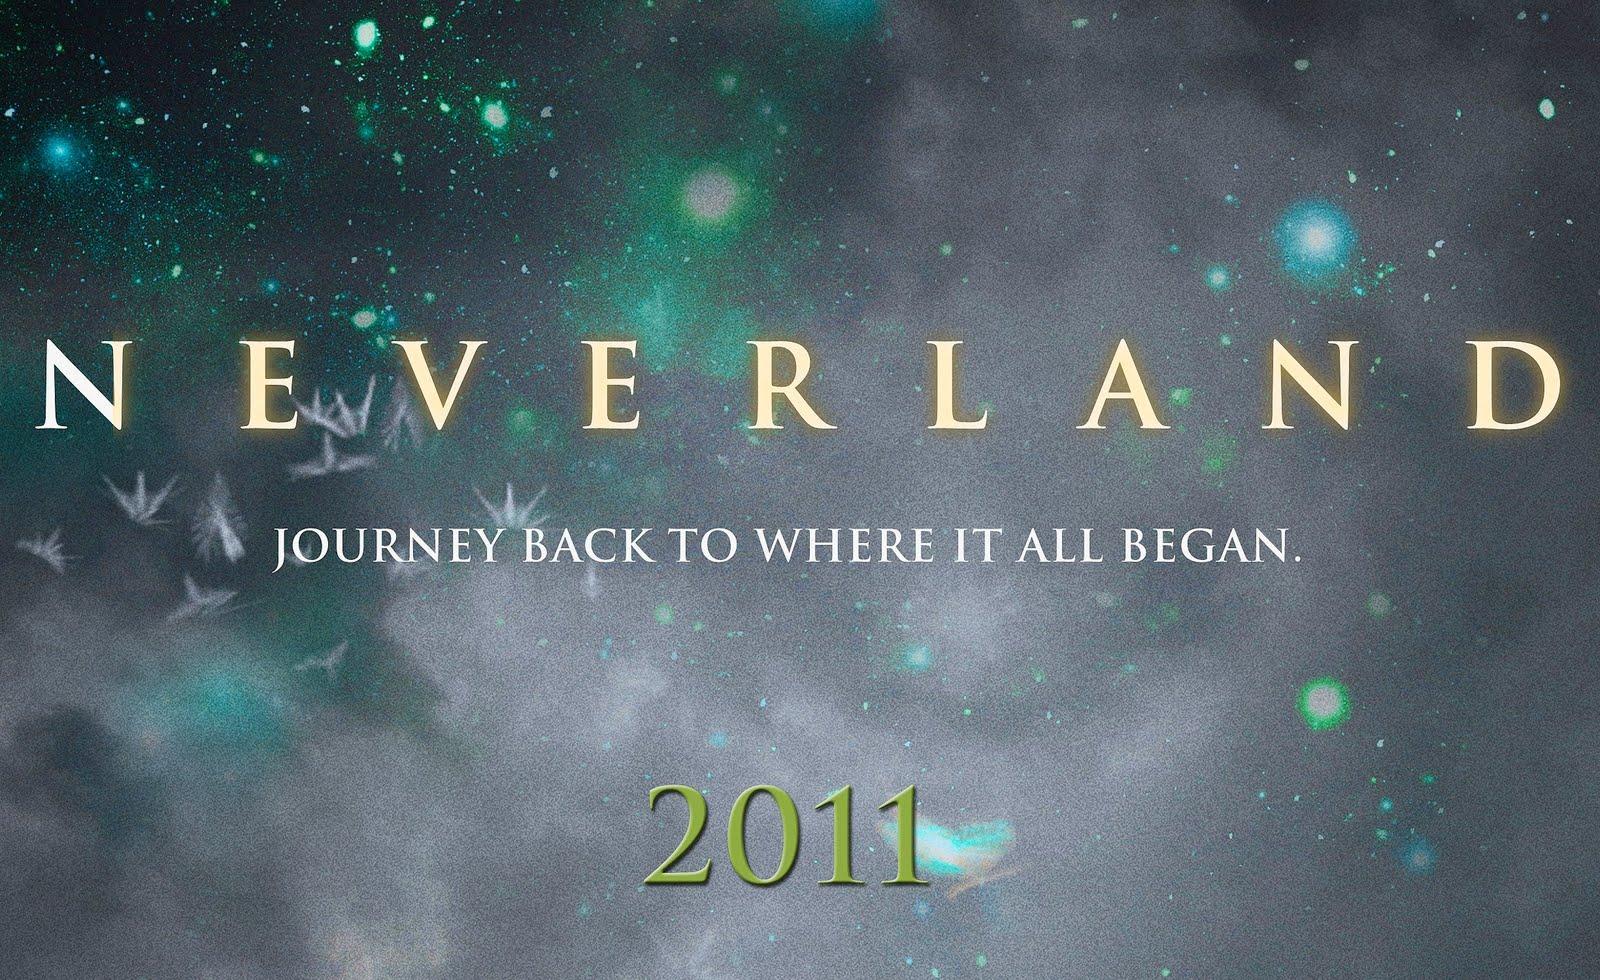 Neverland 2011. Neverland is ответ. Неверленд песня. Неверленд Нирвана. Back journey